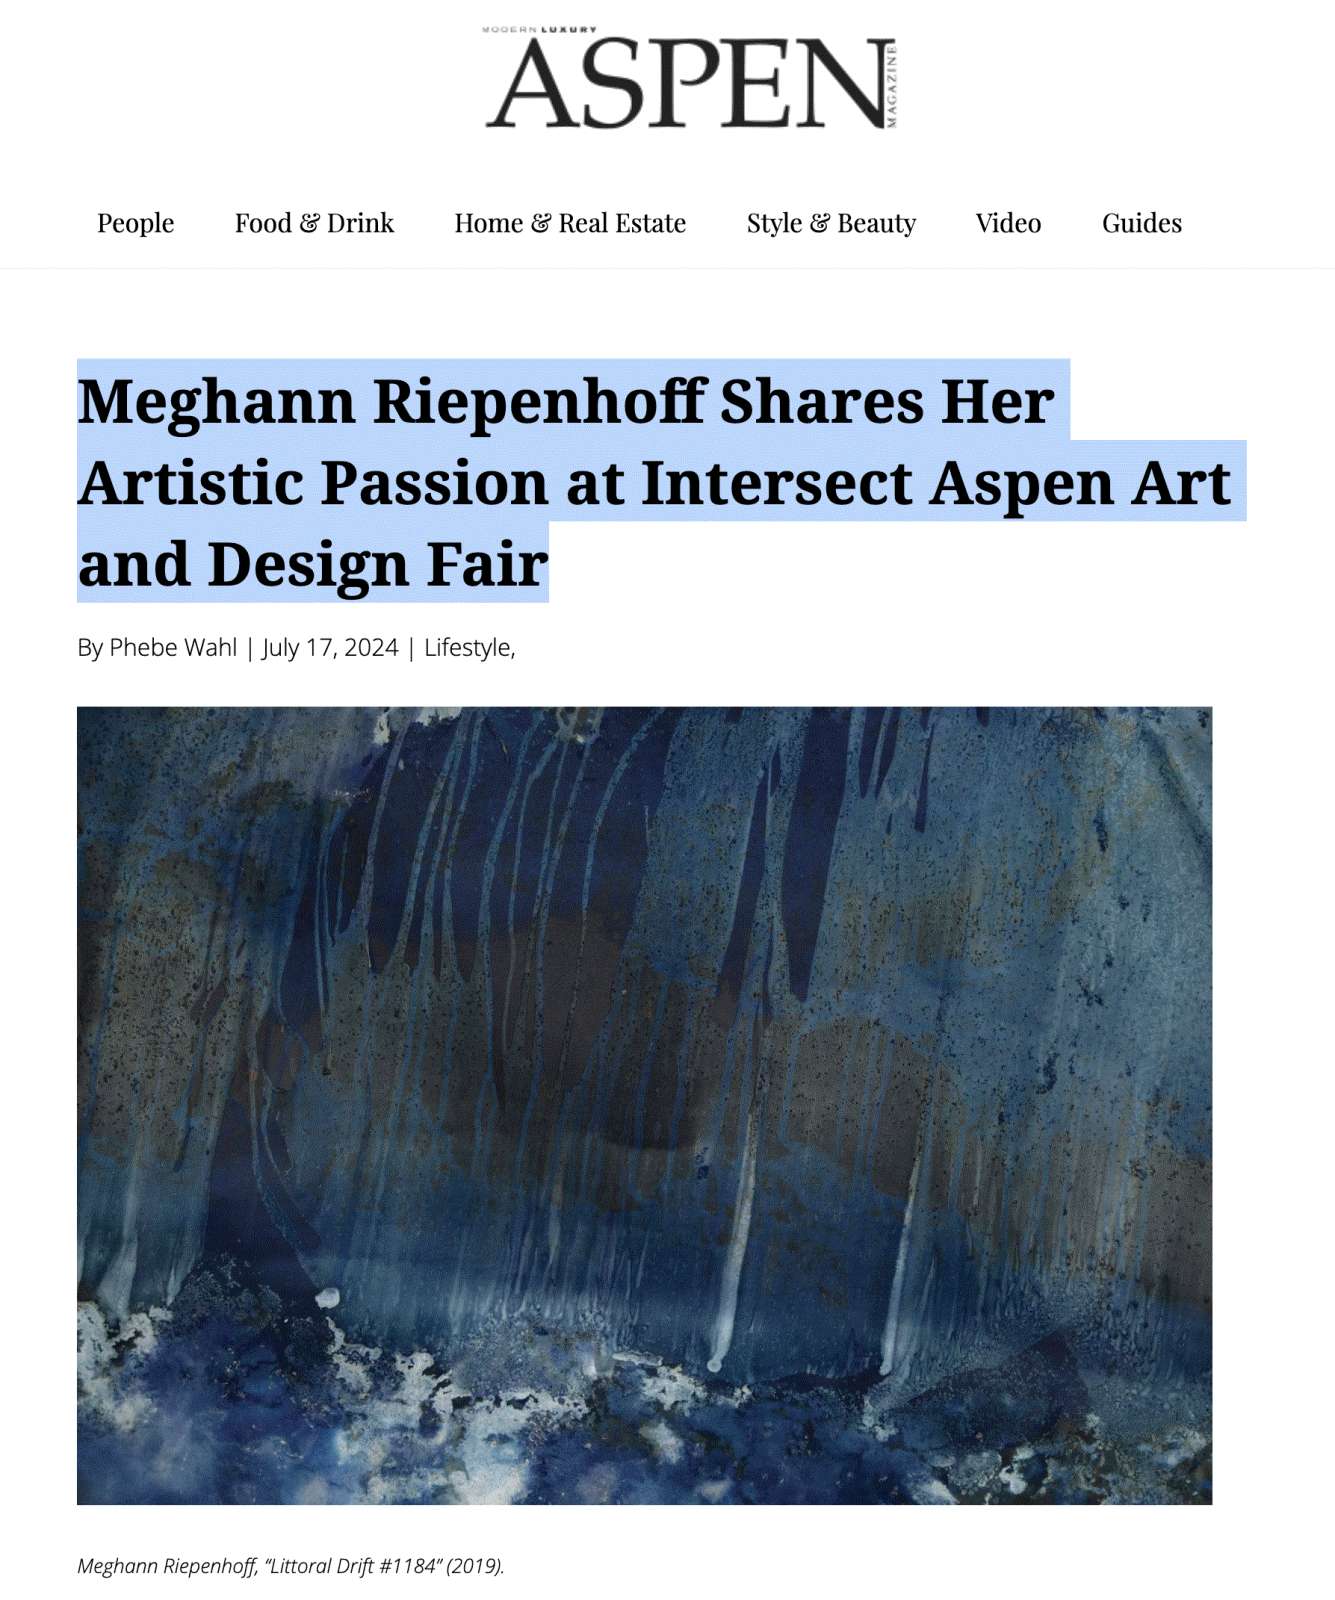 Meghann Riepenhoff Shares Her Artistic Passion at Intersect Aspen Art and Design Fair